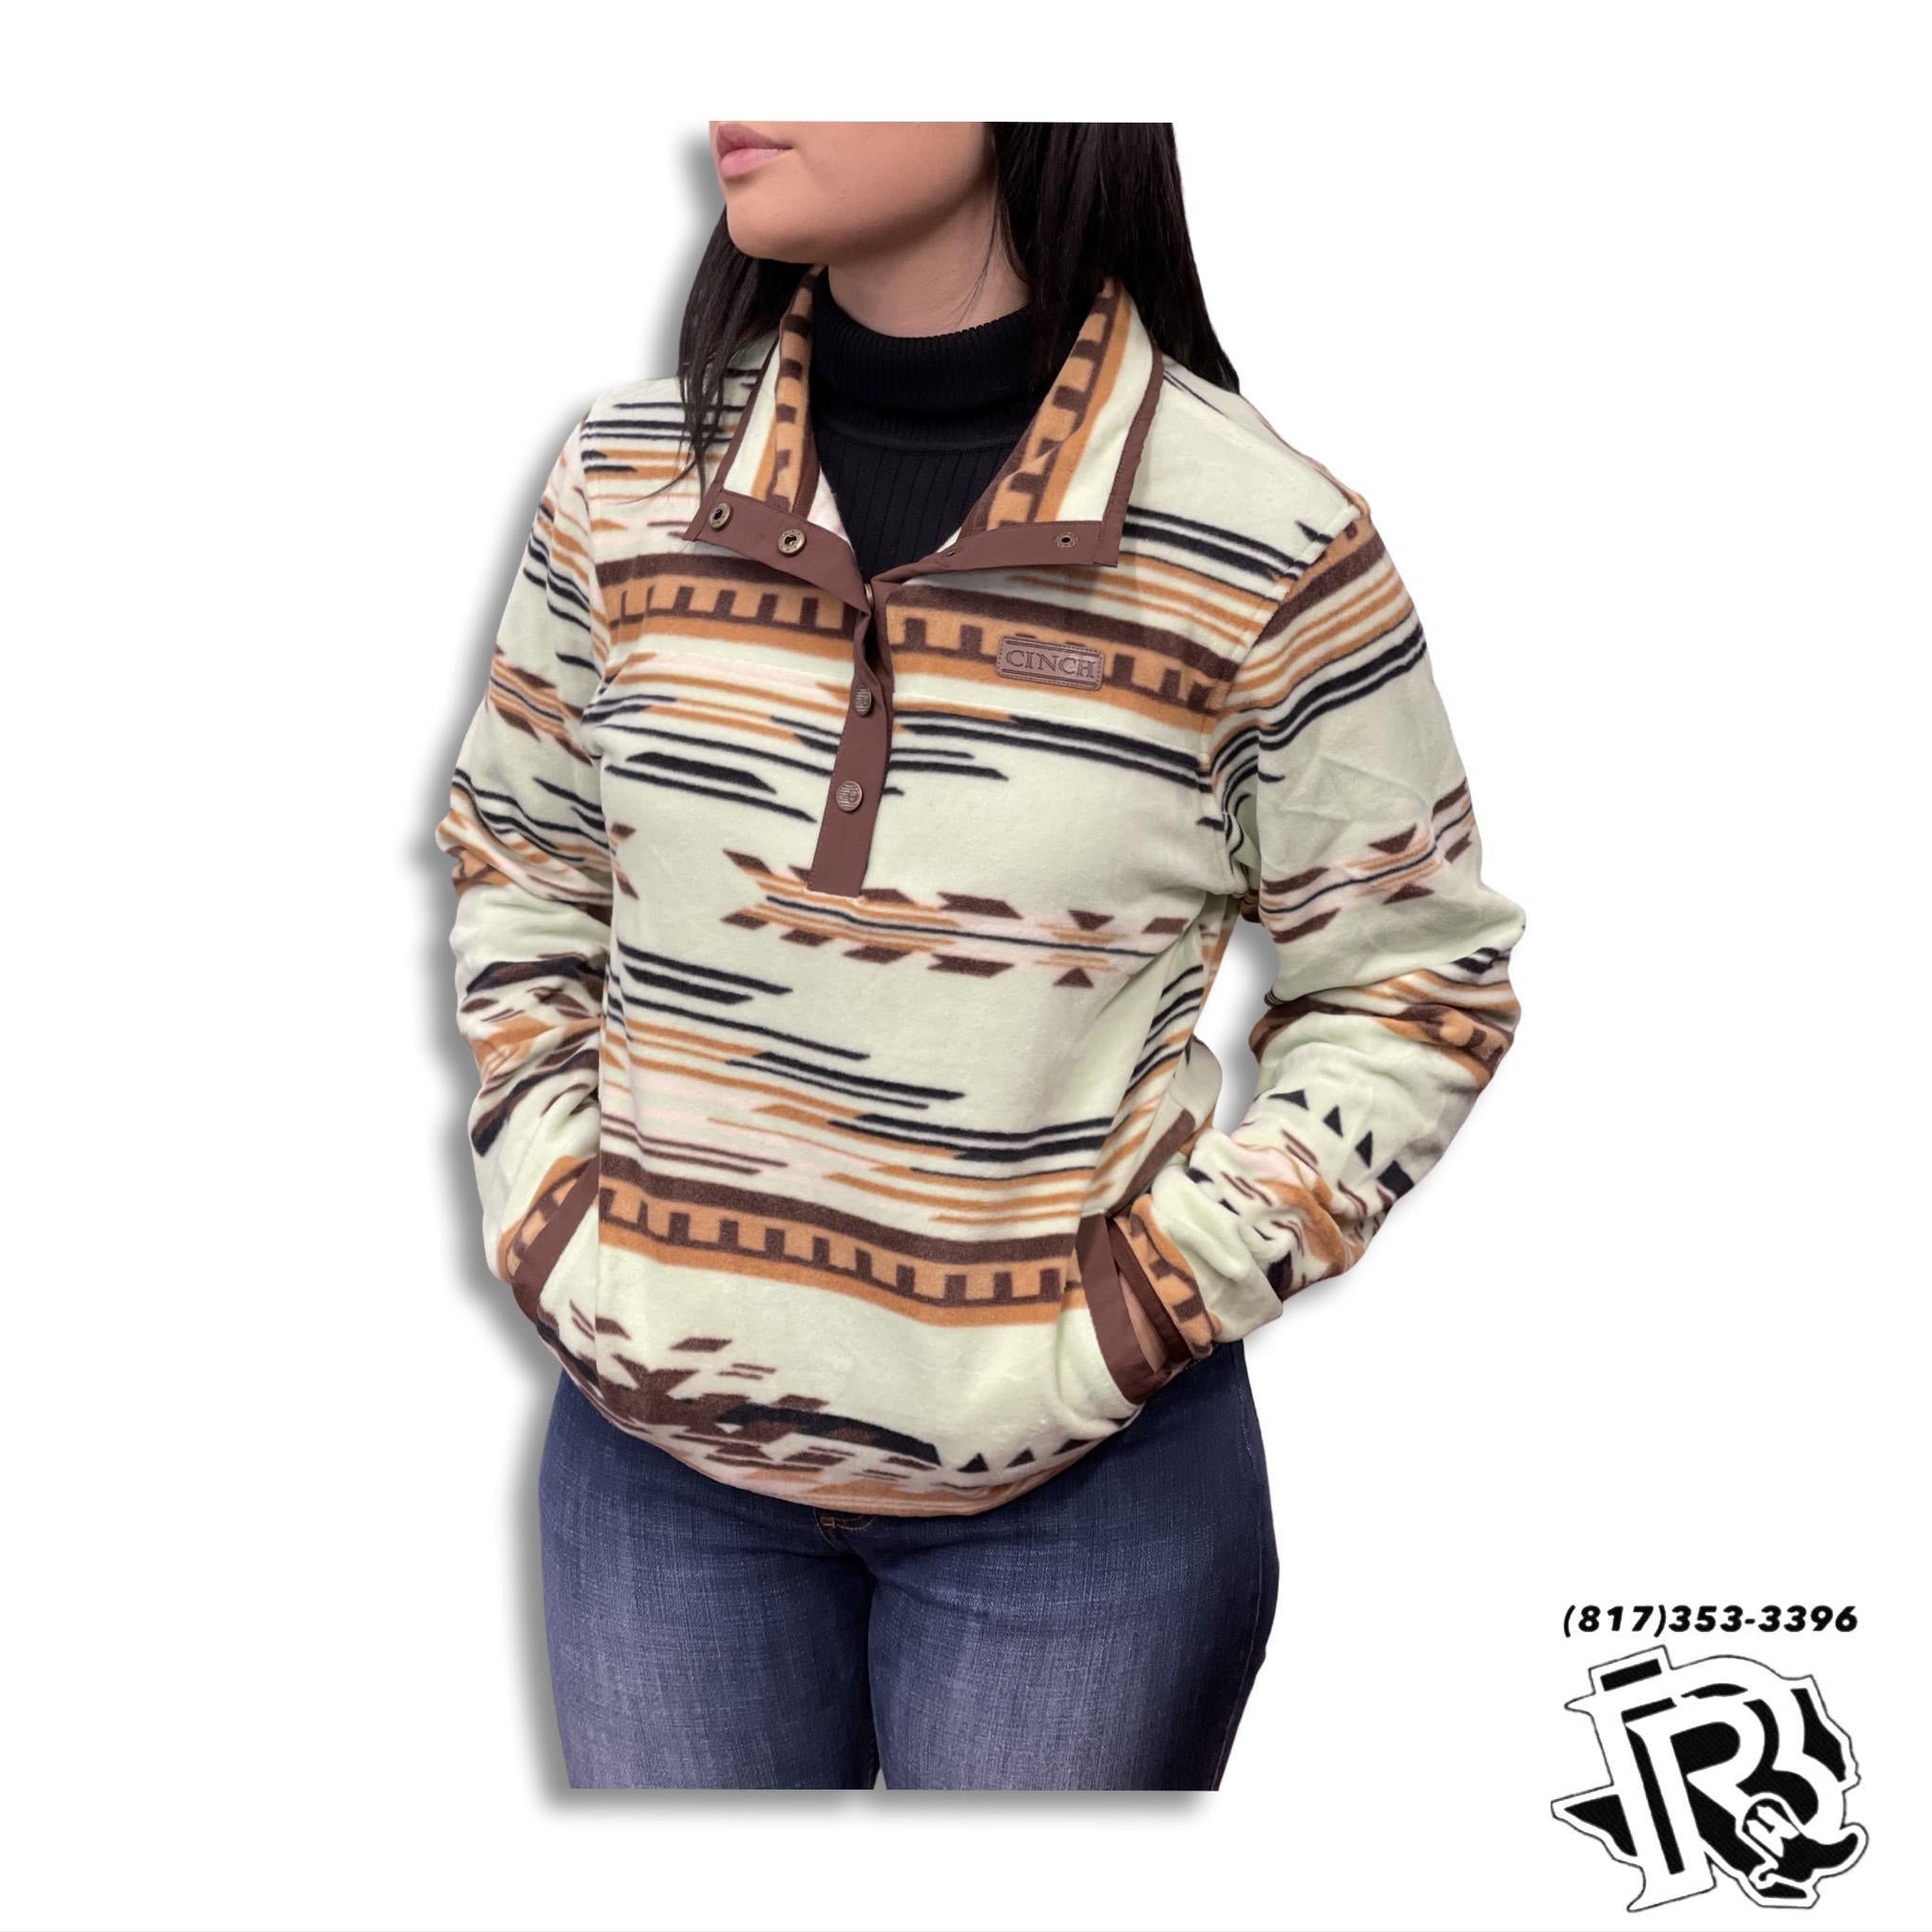 Sweater Mujer Portsaid Patch Netflix (AP726600)